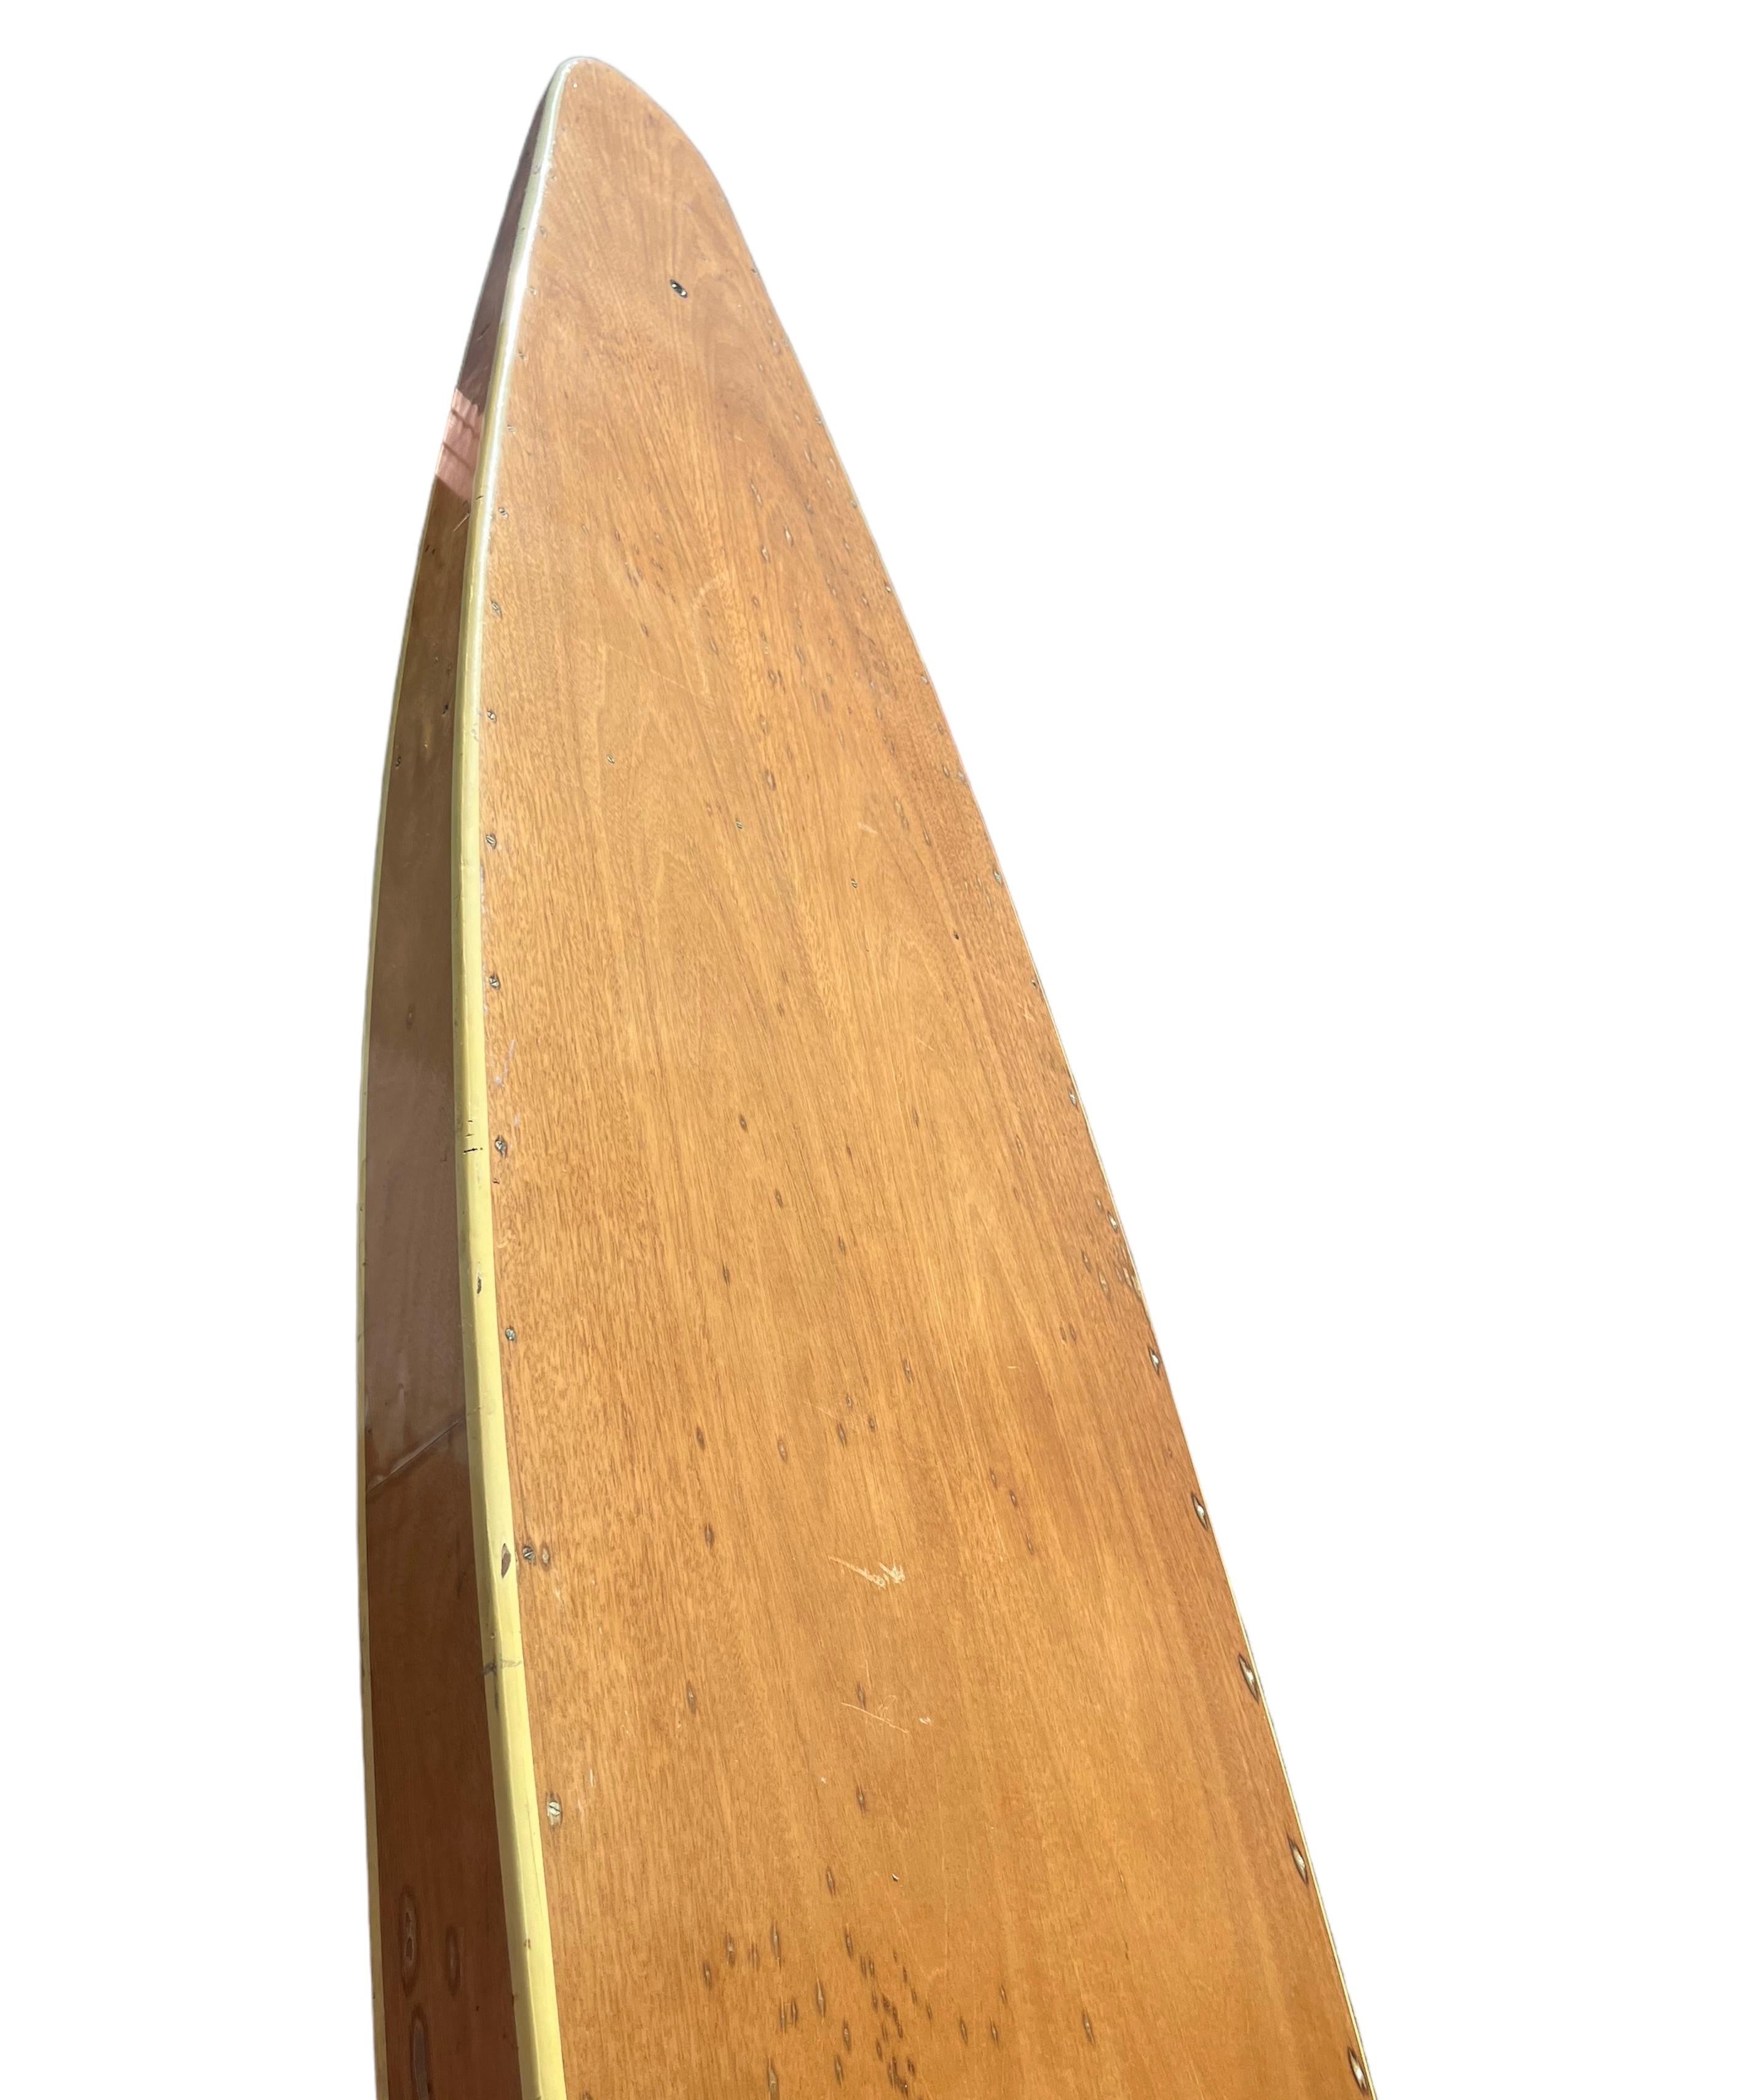 hollow wooden surfboards